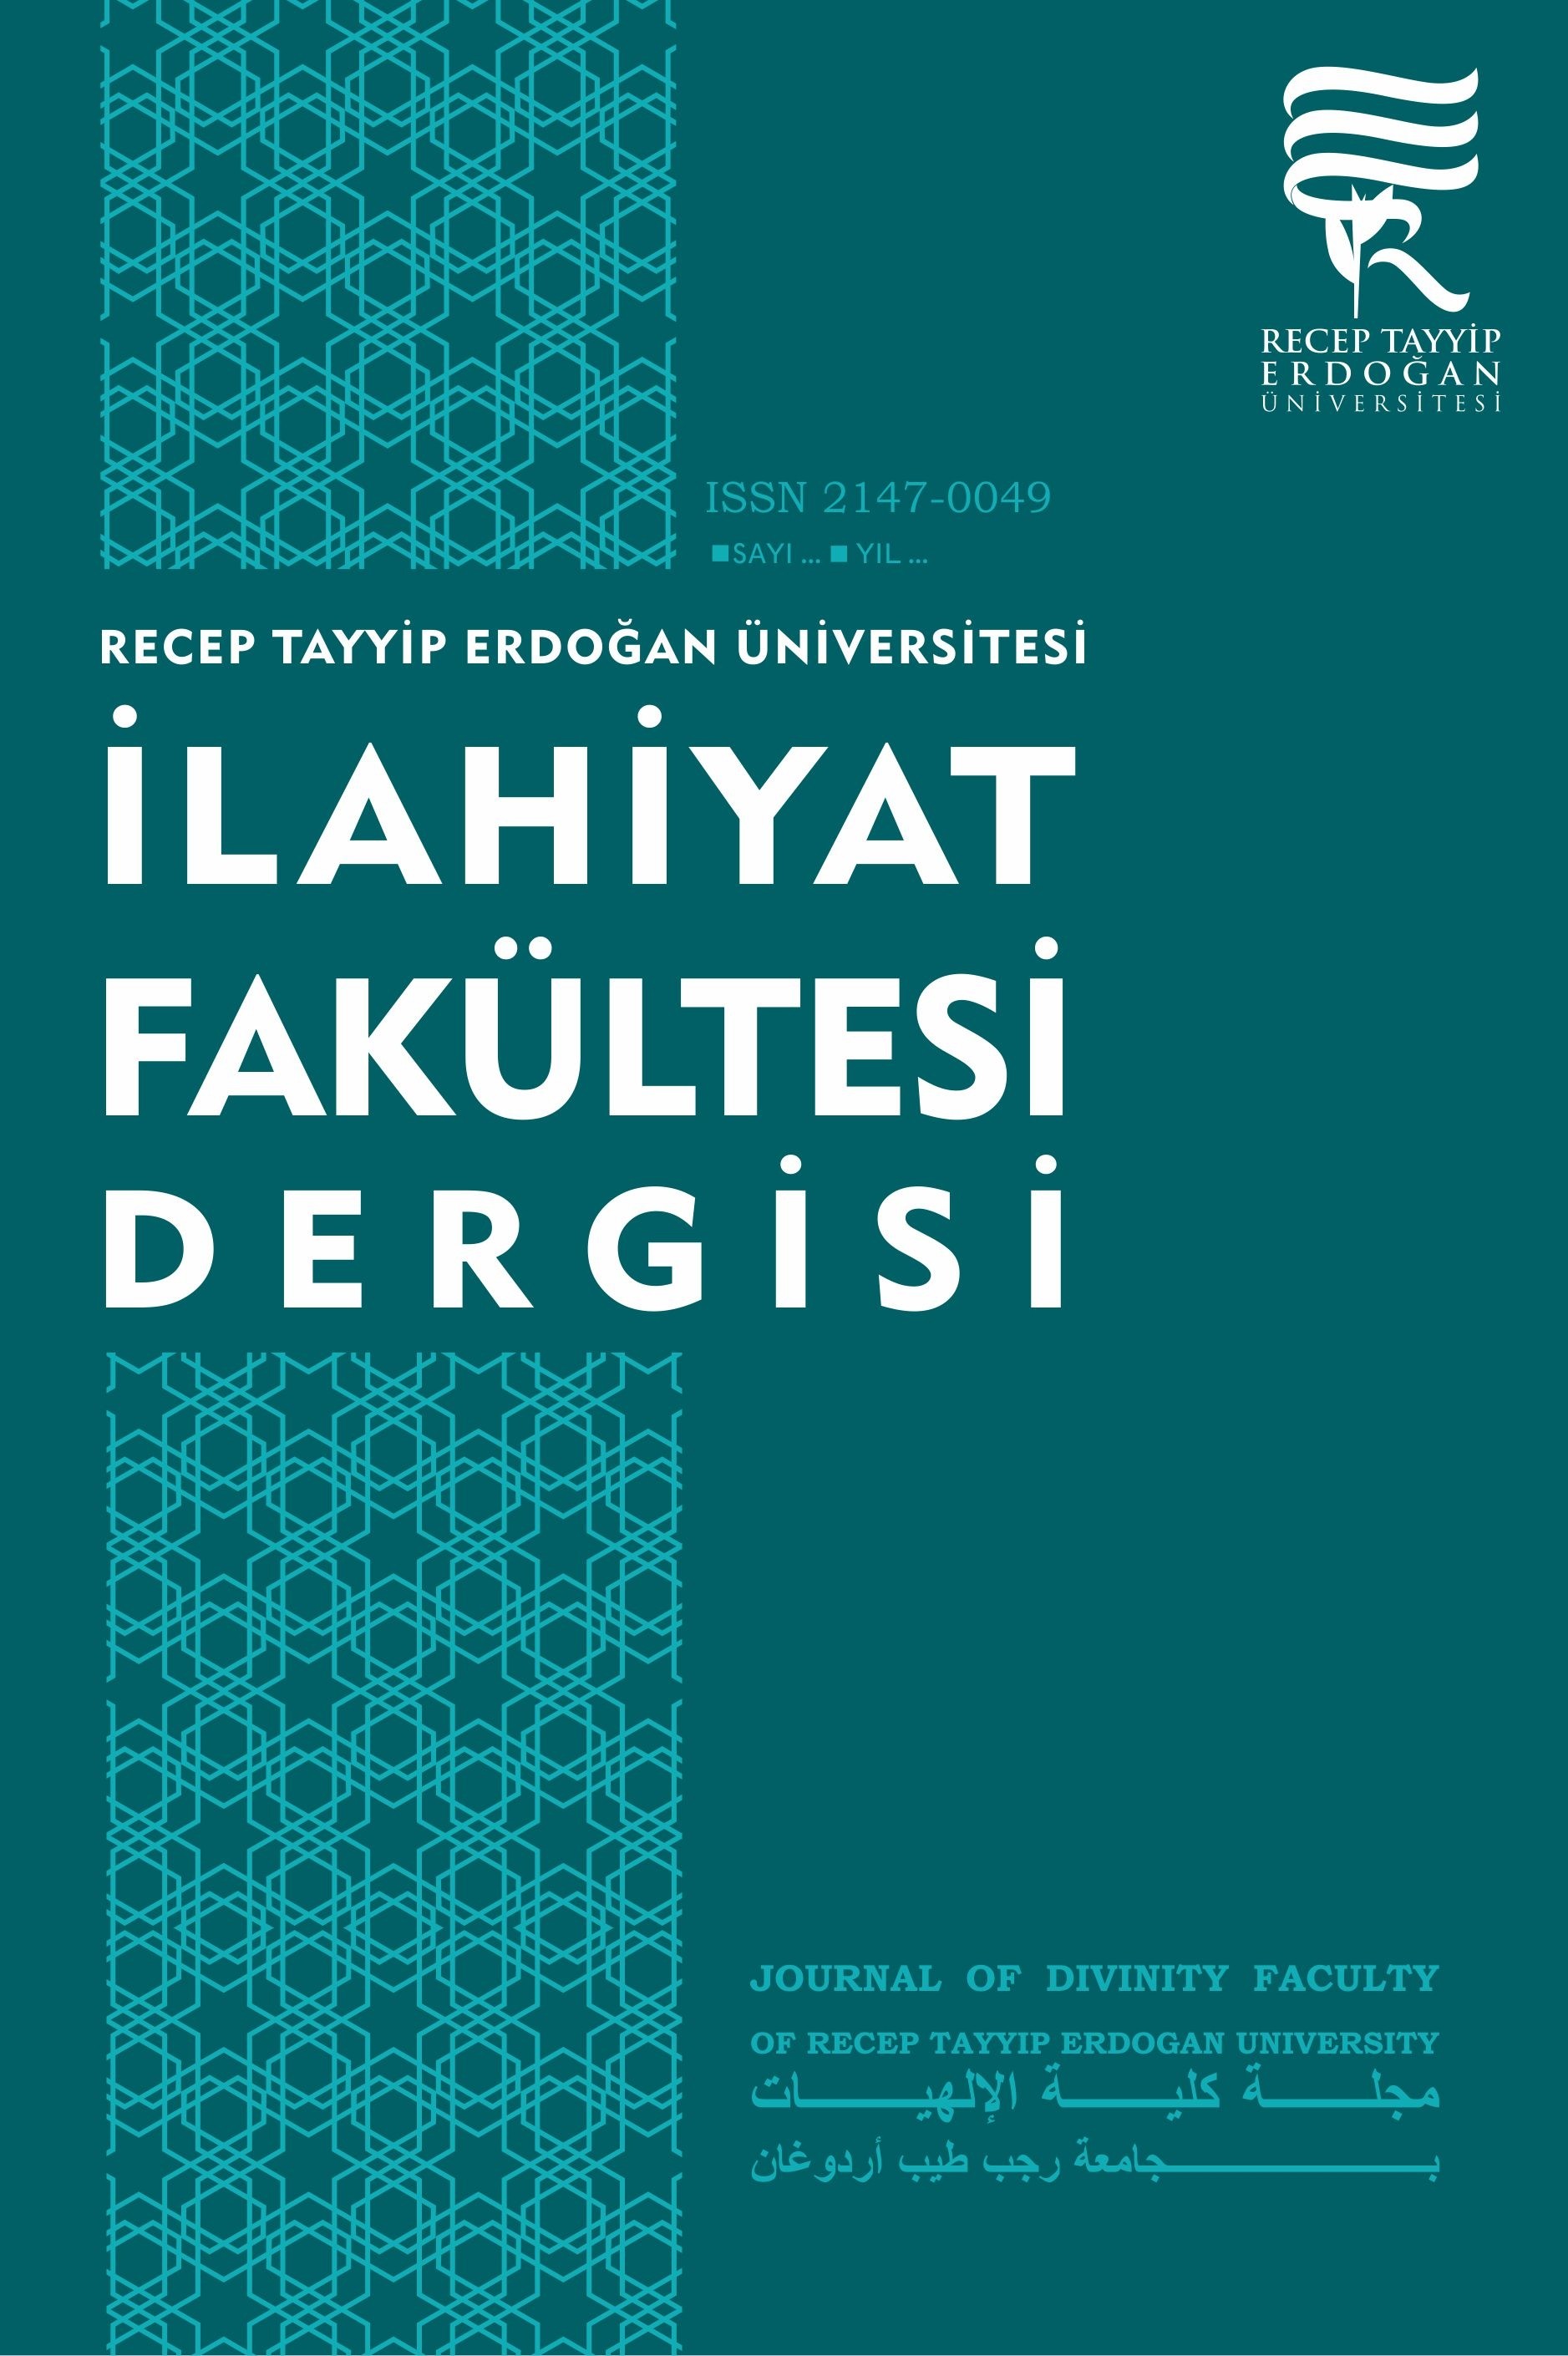 Journal of Divinity Faculty of Recep Tayyip Erdogan University